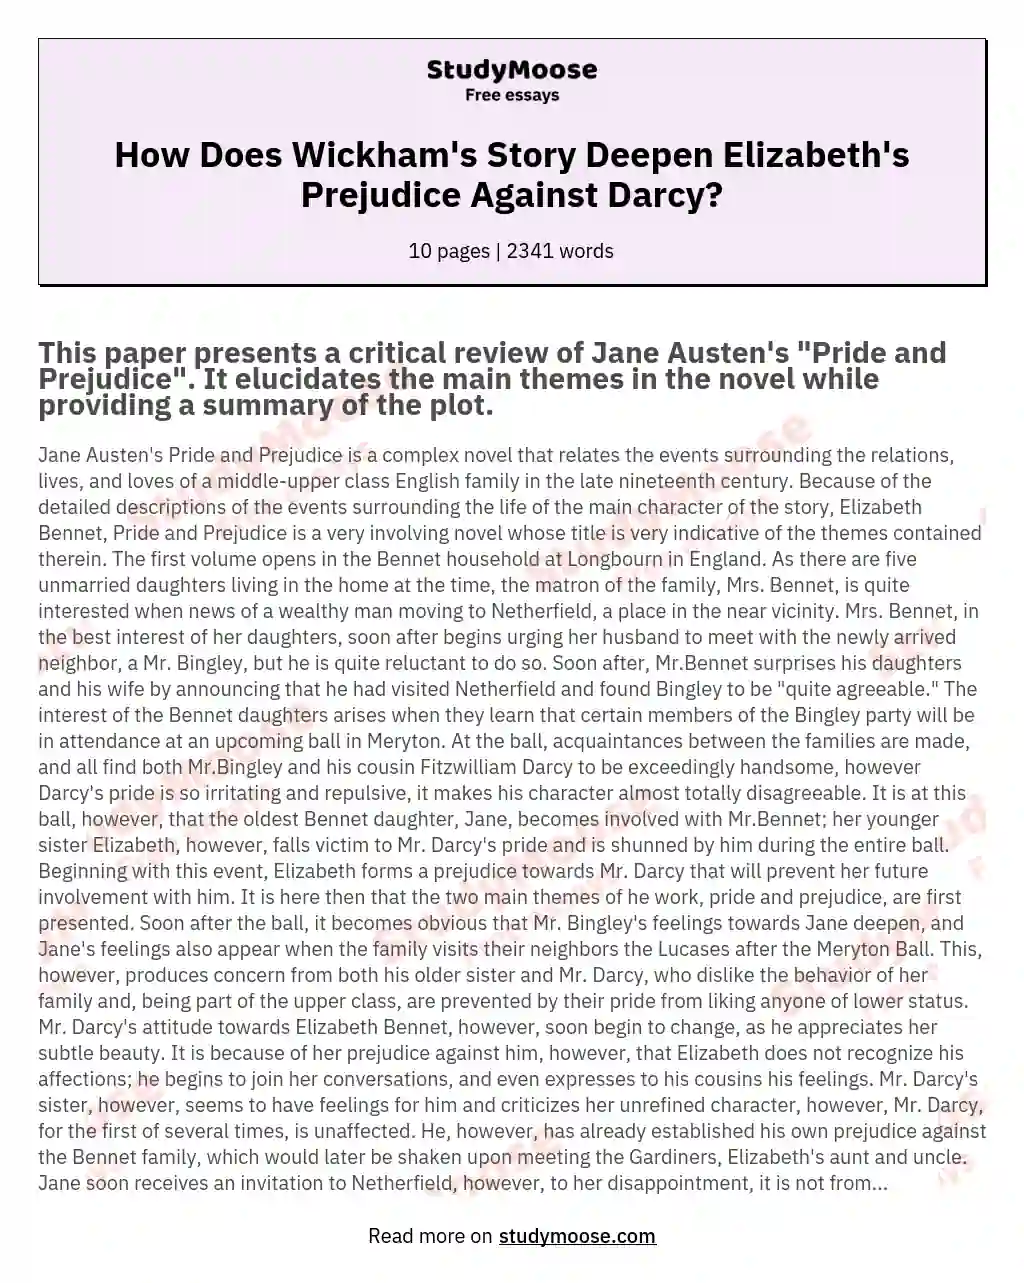 How Does Wickham's Story Deepen Elizabeth's Prejudice Against Darcy? essay